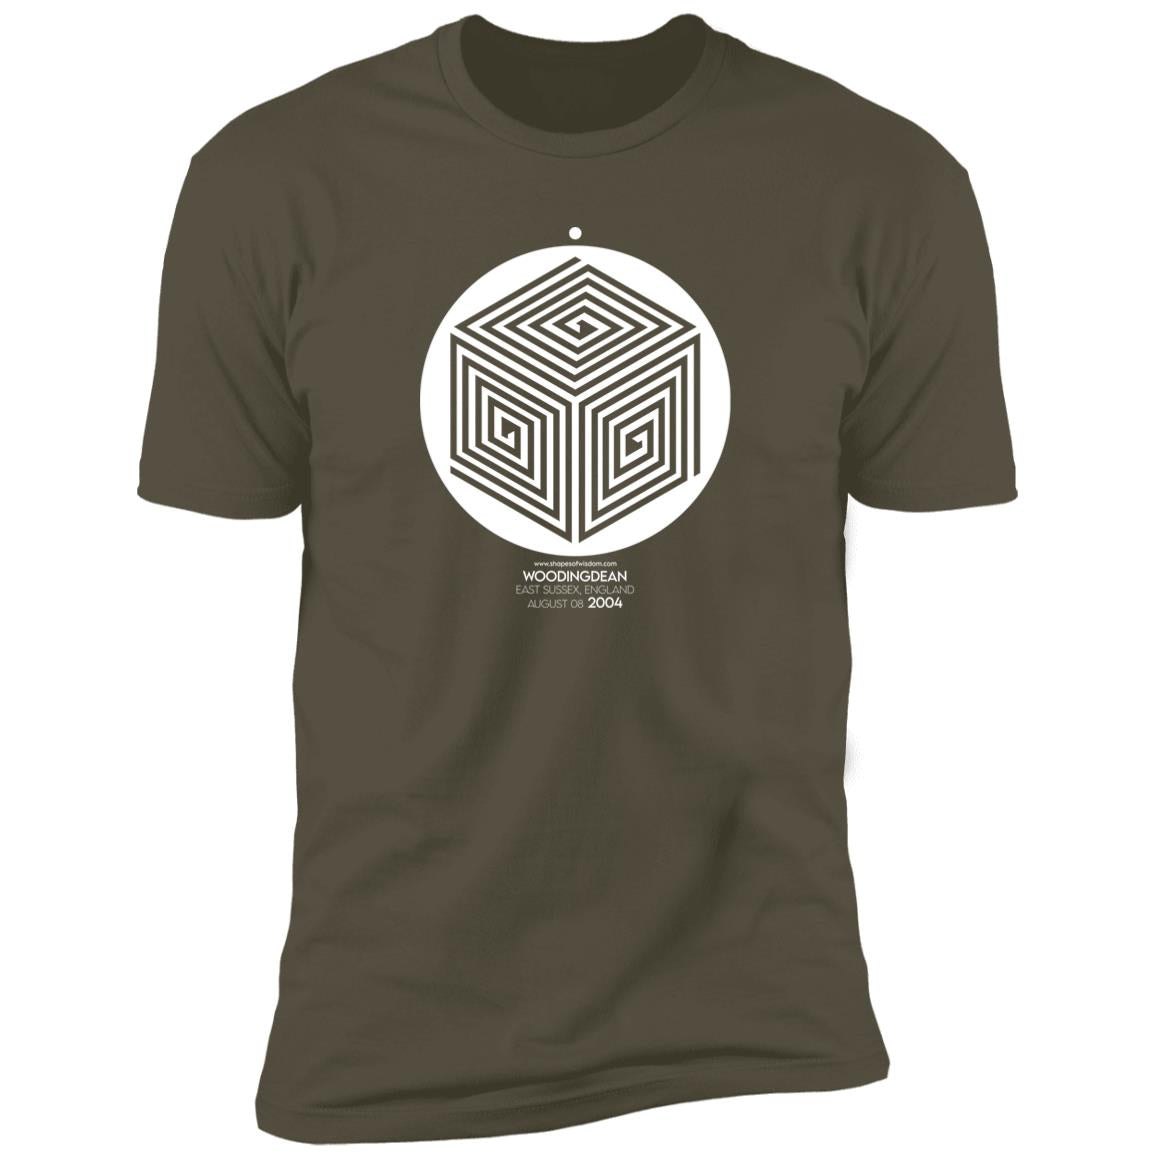 Crop Circle Premium T-Shirt - Woodingdean 3